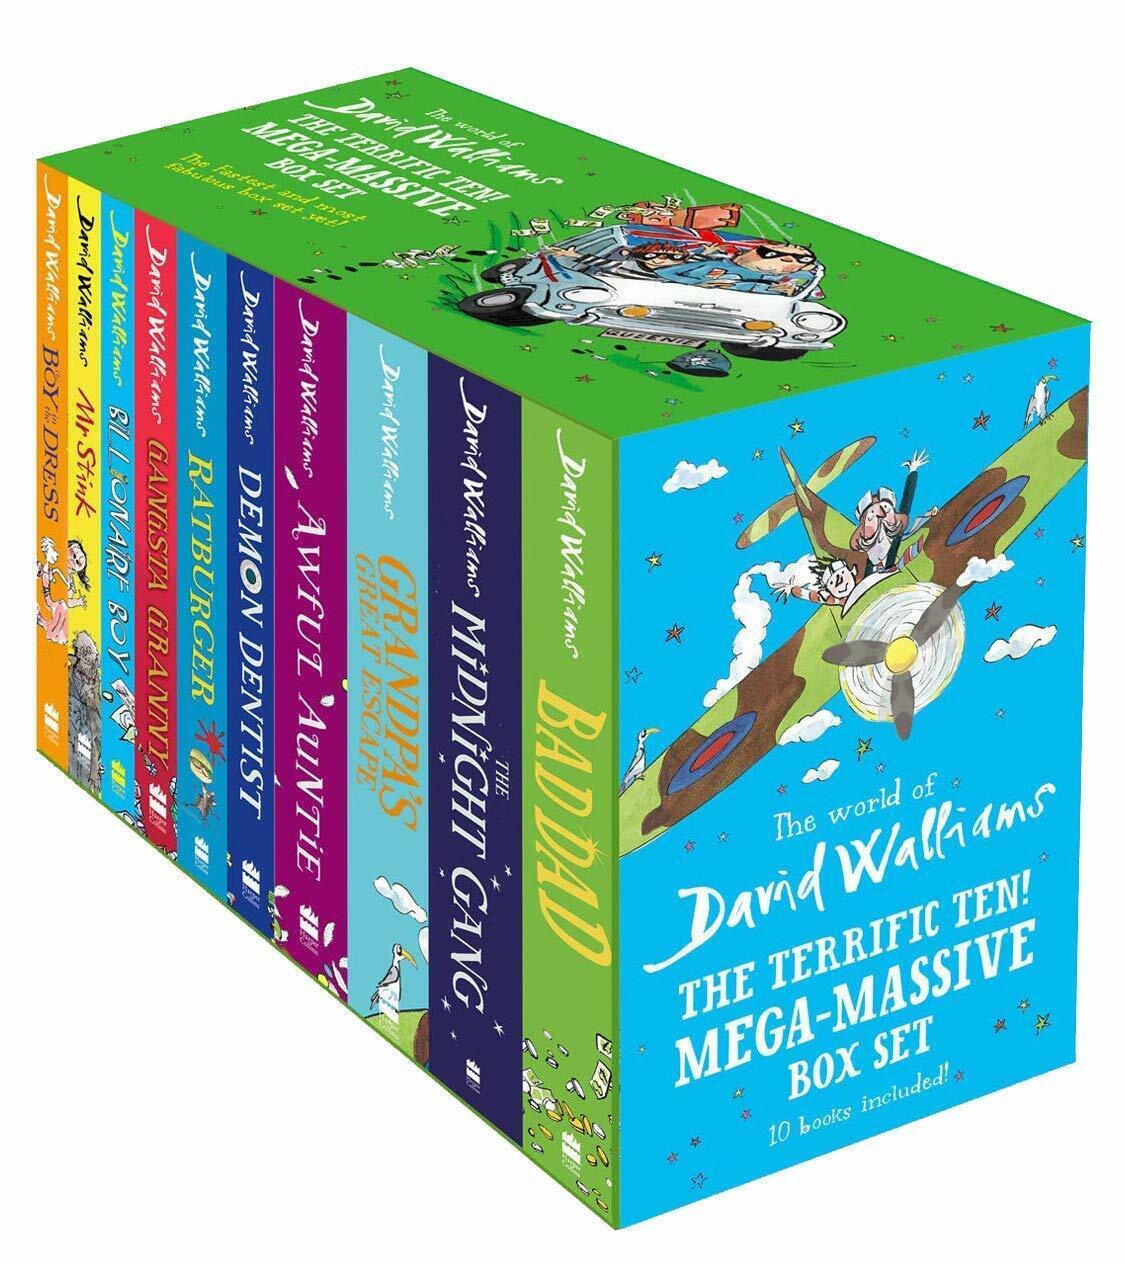 World of David Walliams The Terrific Ten! Mega-Massive 10 Books Collection Set - Lets Buy Books